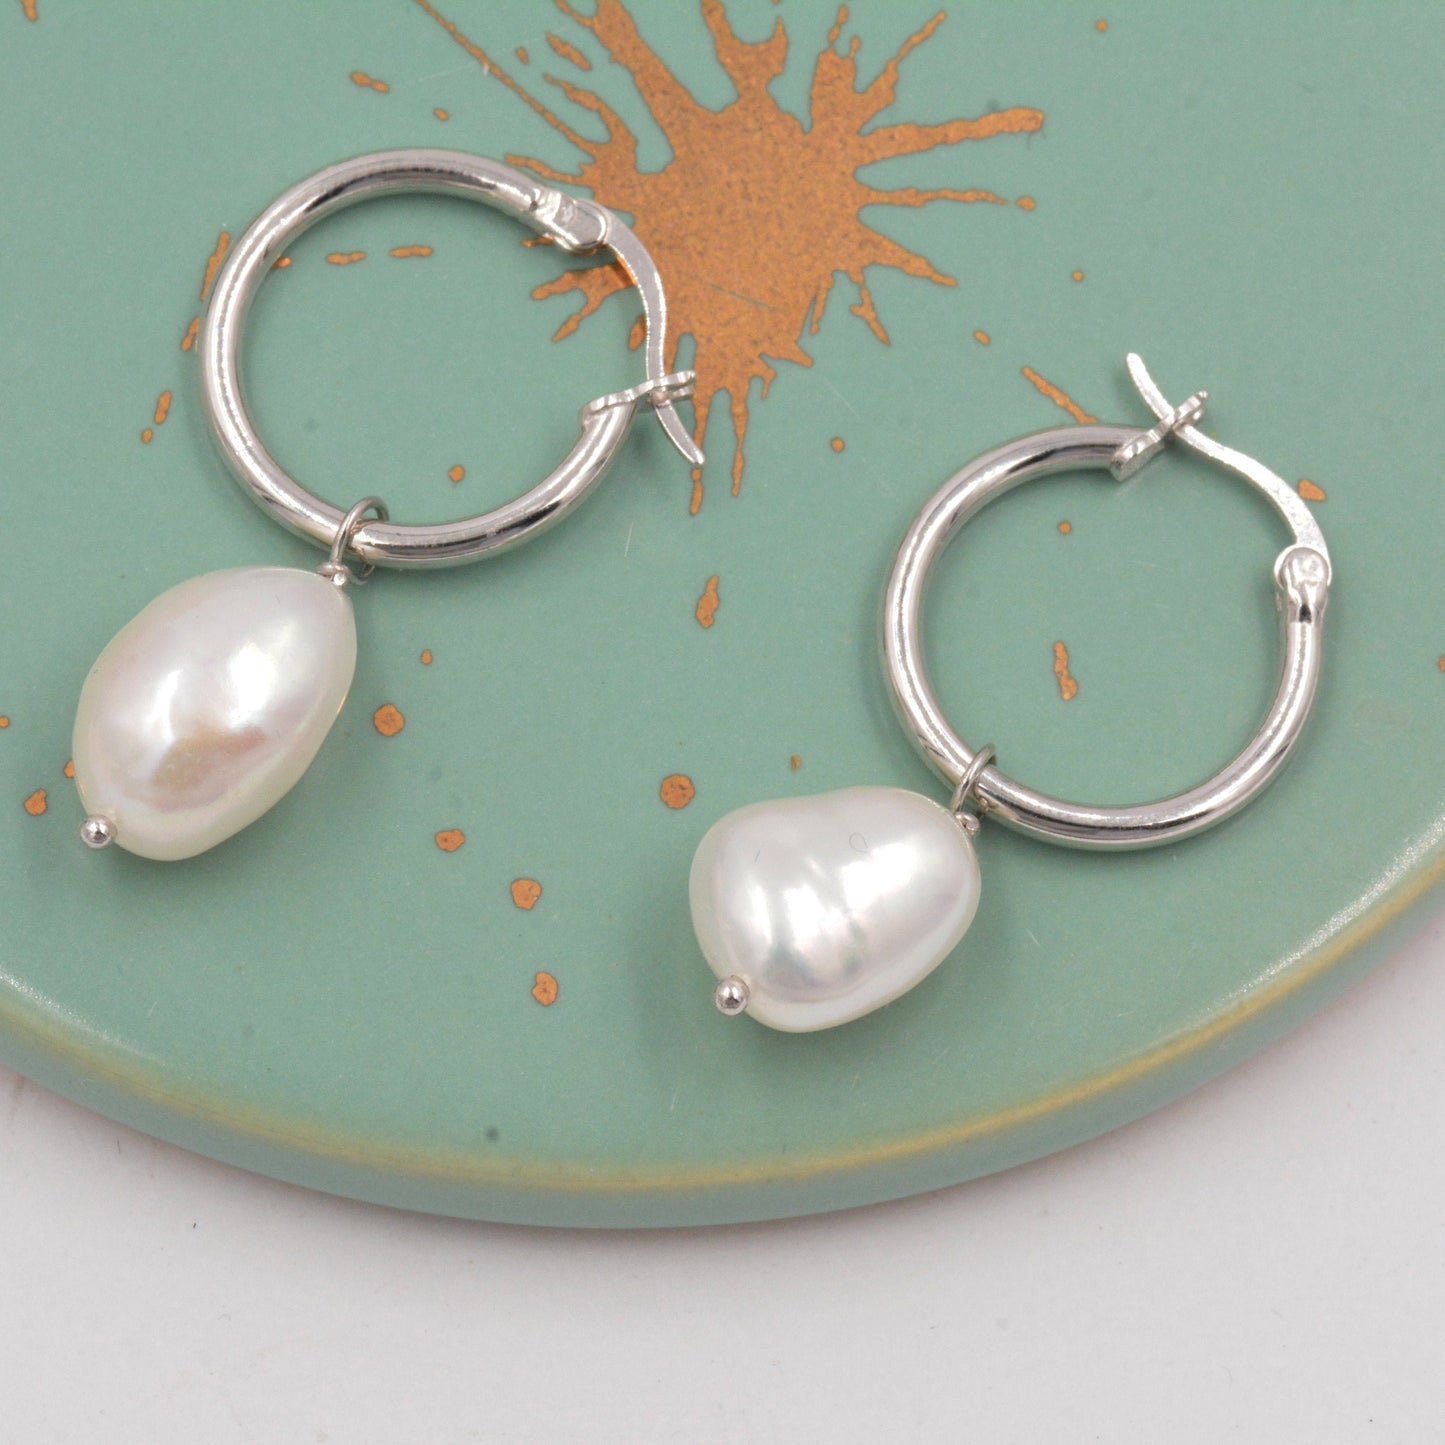 Pair of Plain Huggie Hoop Earrings in Sterling Silver with Detachable Baroque Pearl Charms,  Two Sizes Available, Simple Hoop Earrings